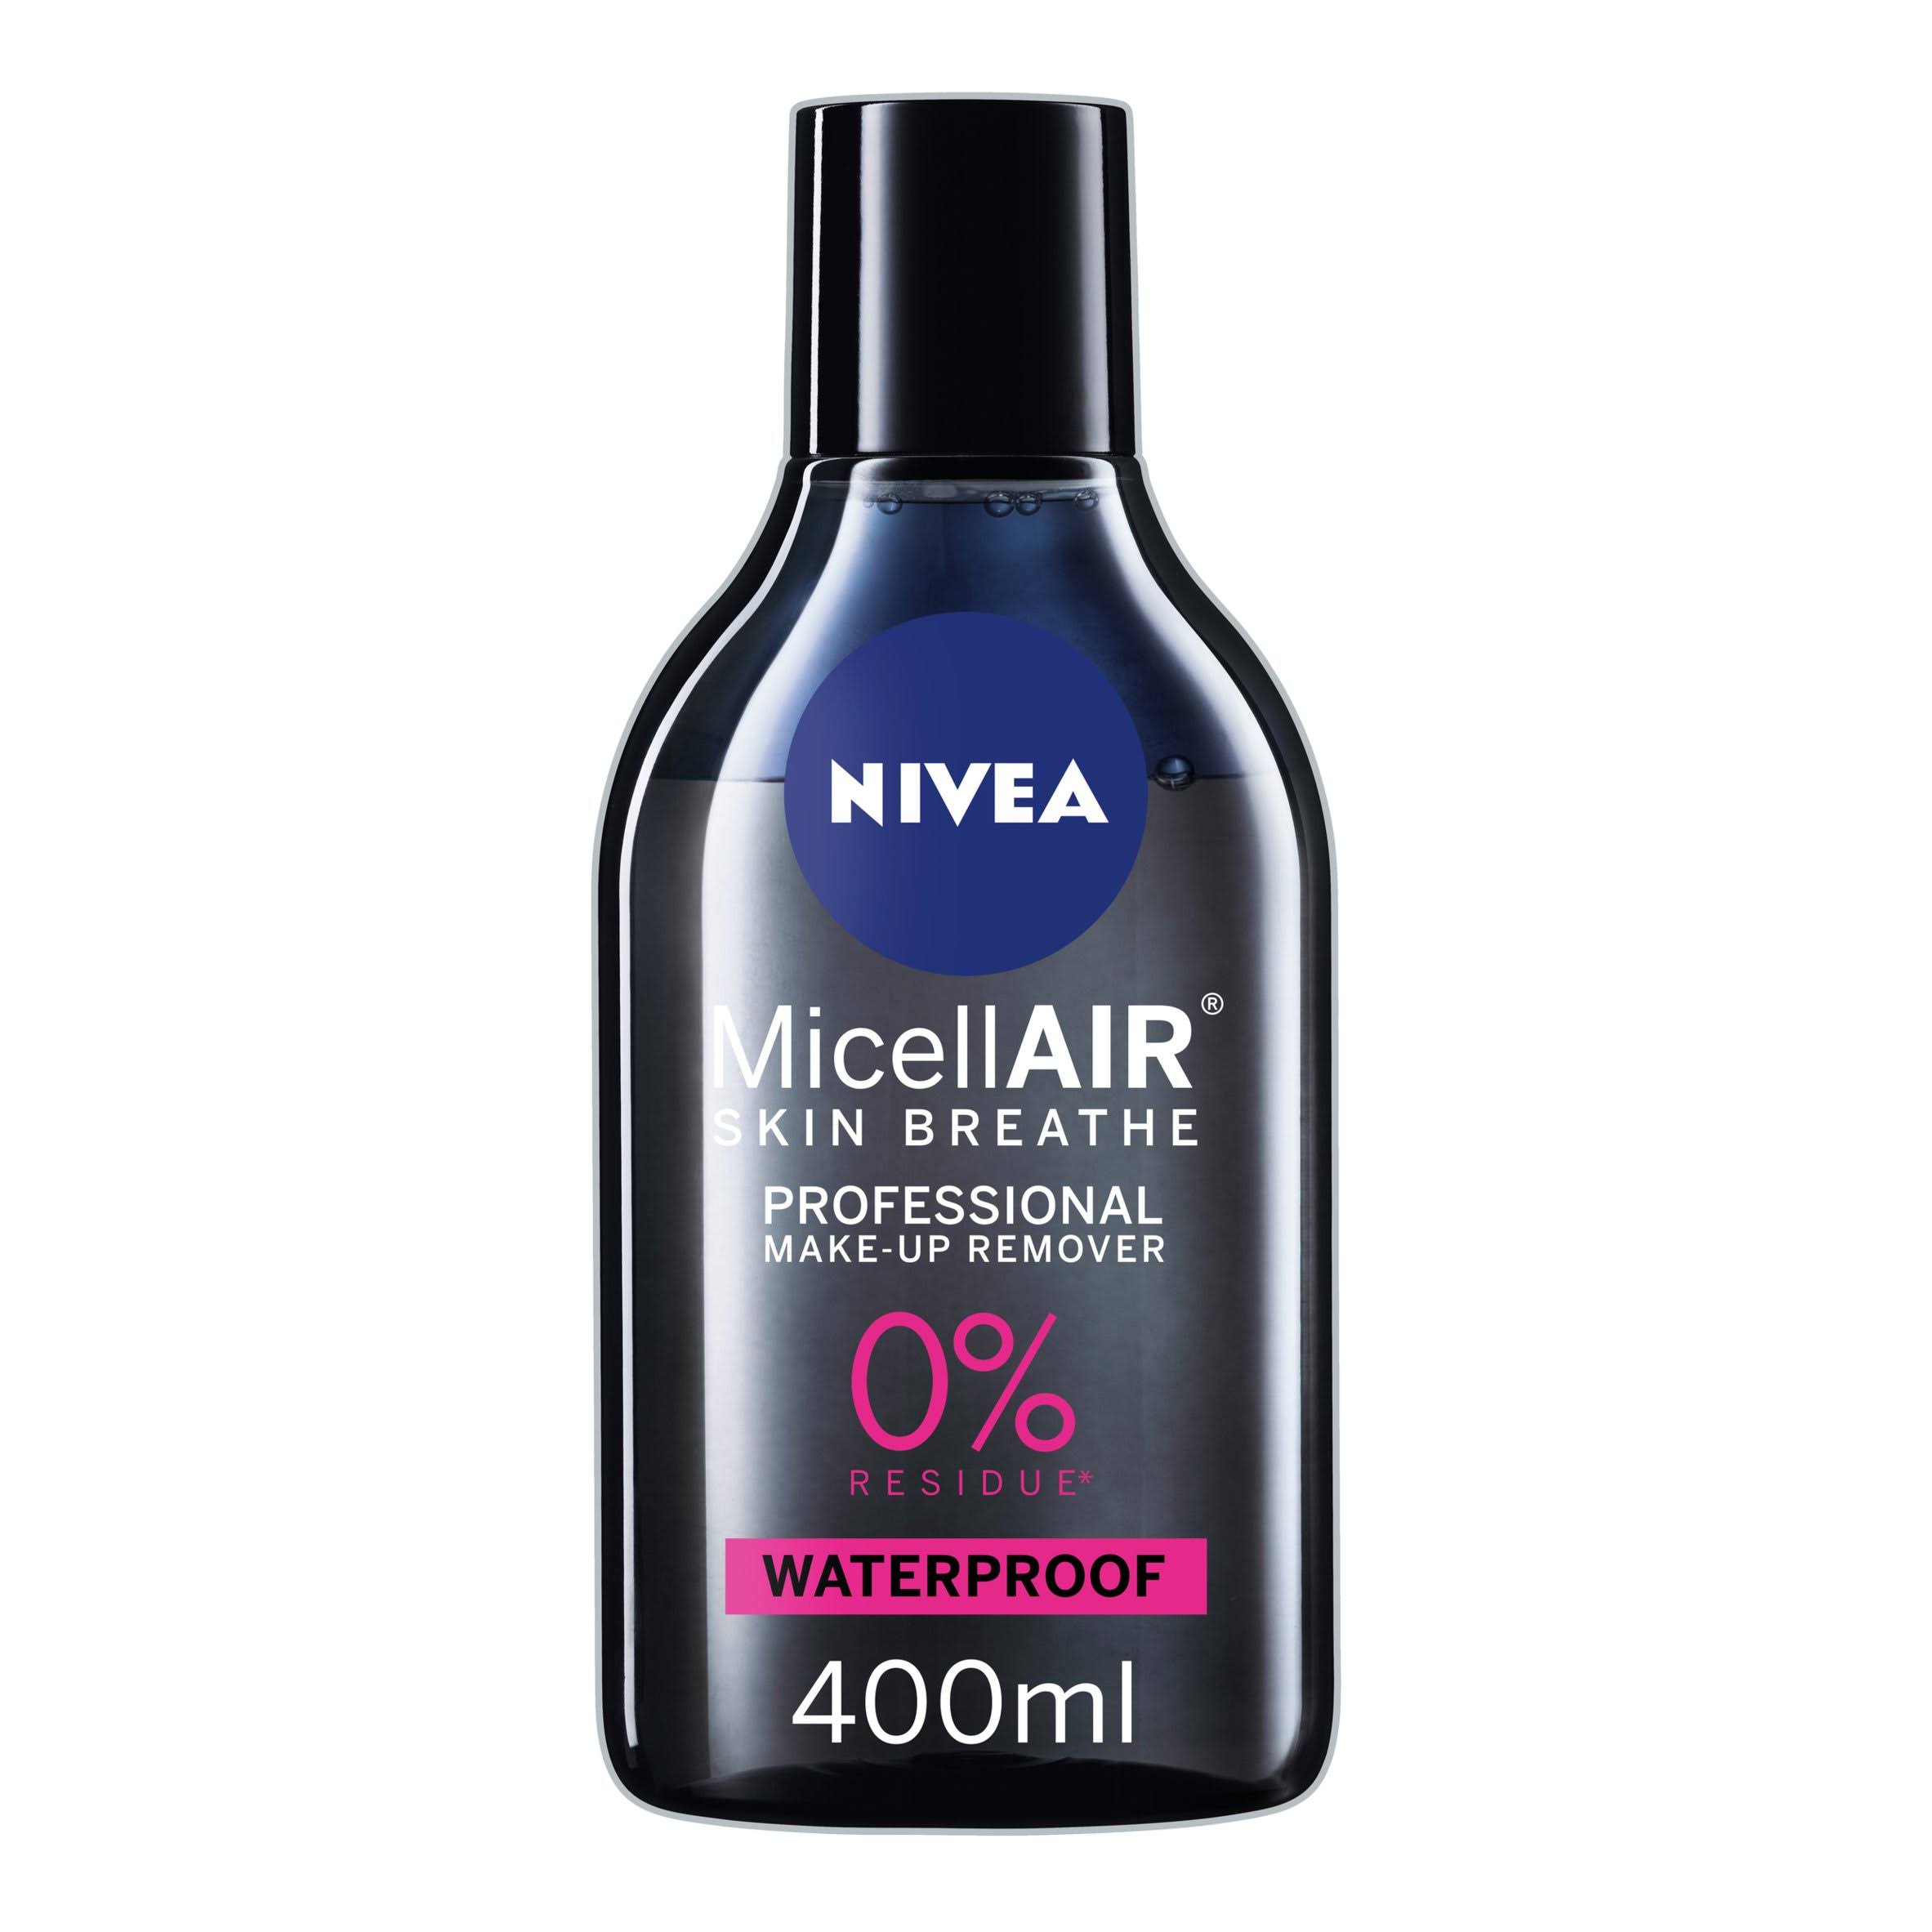 Nivea MicellAIR Professional Make-up Remover 400ml